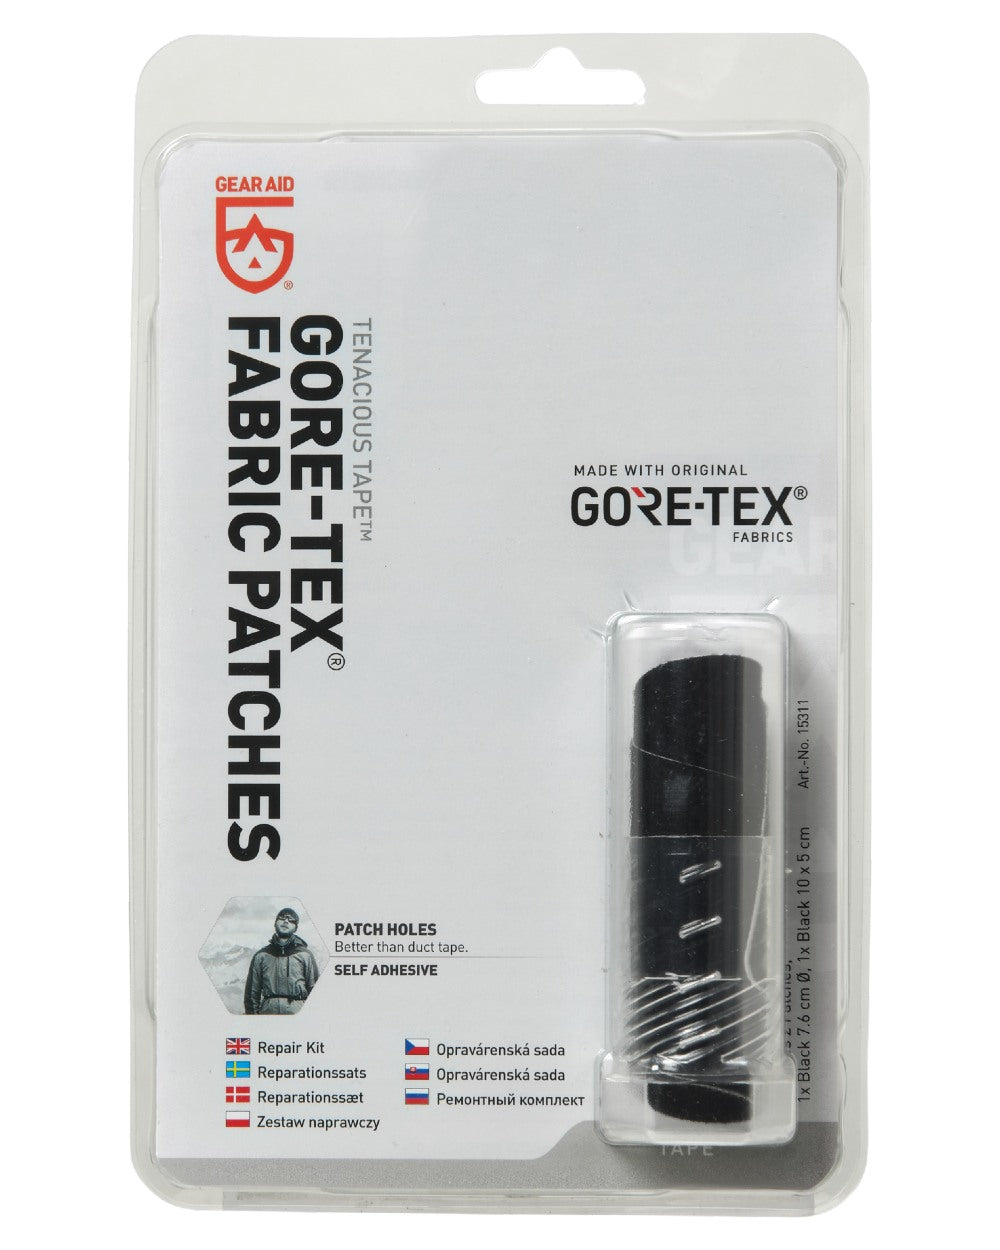 Black coloured Harkila GORE-TEX Repair Kit on white background